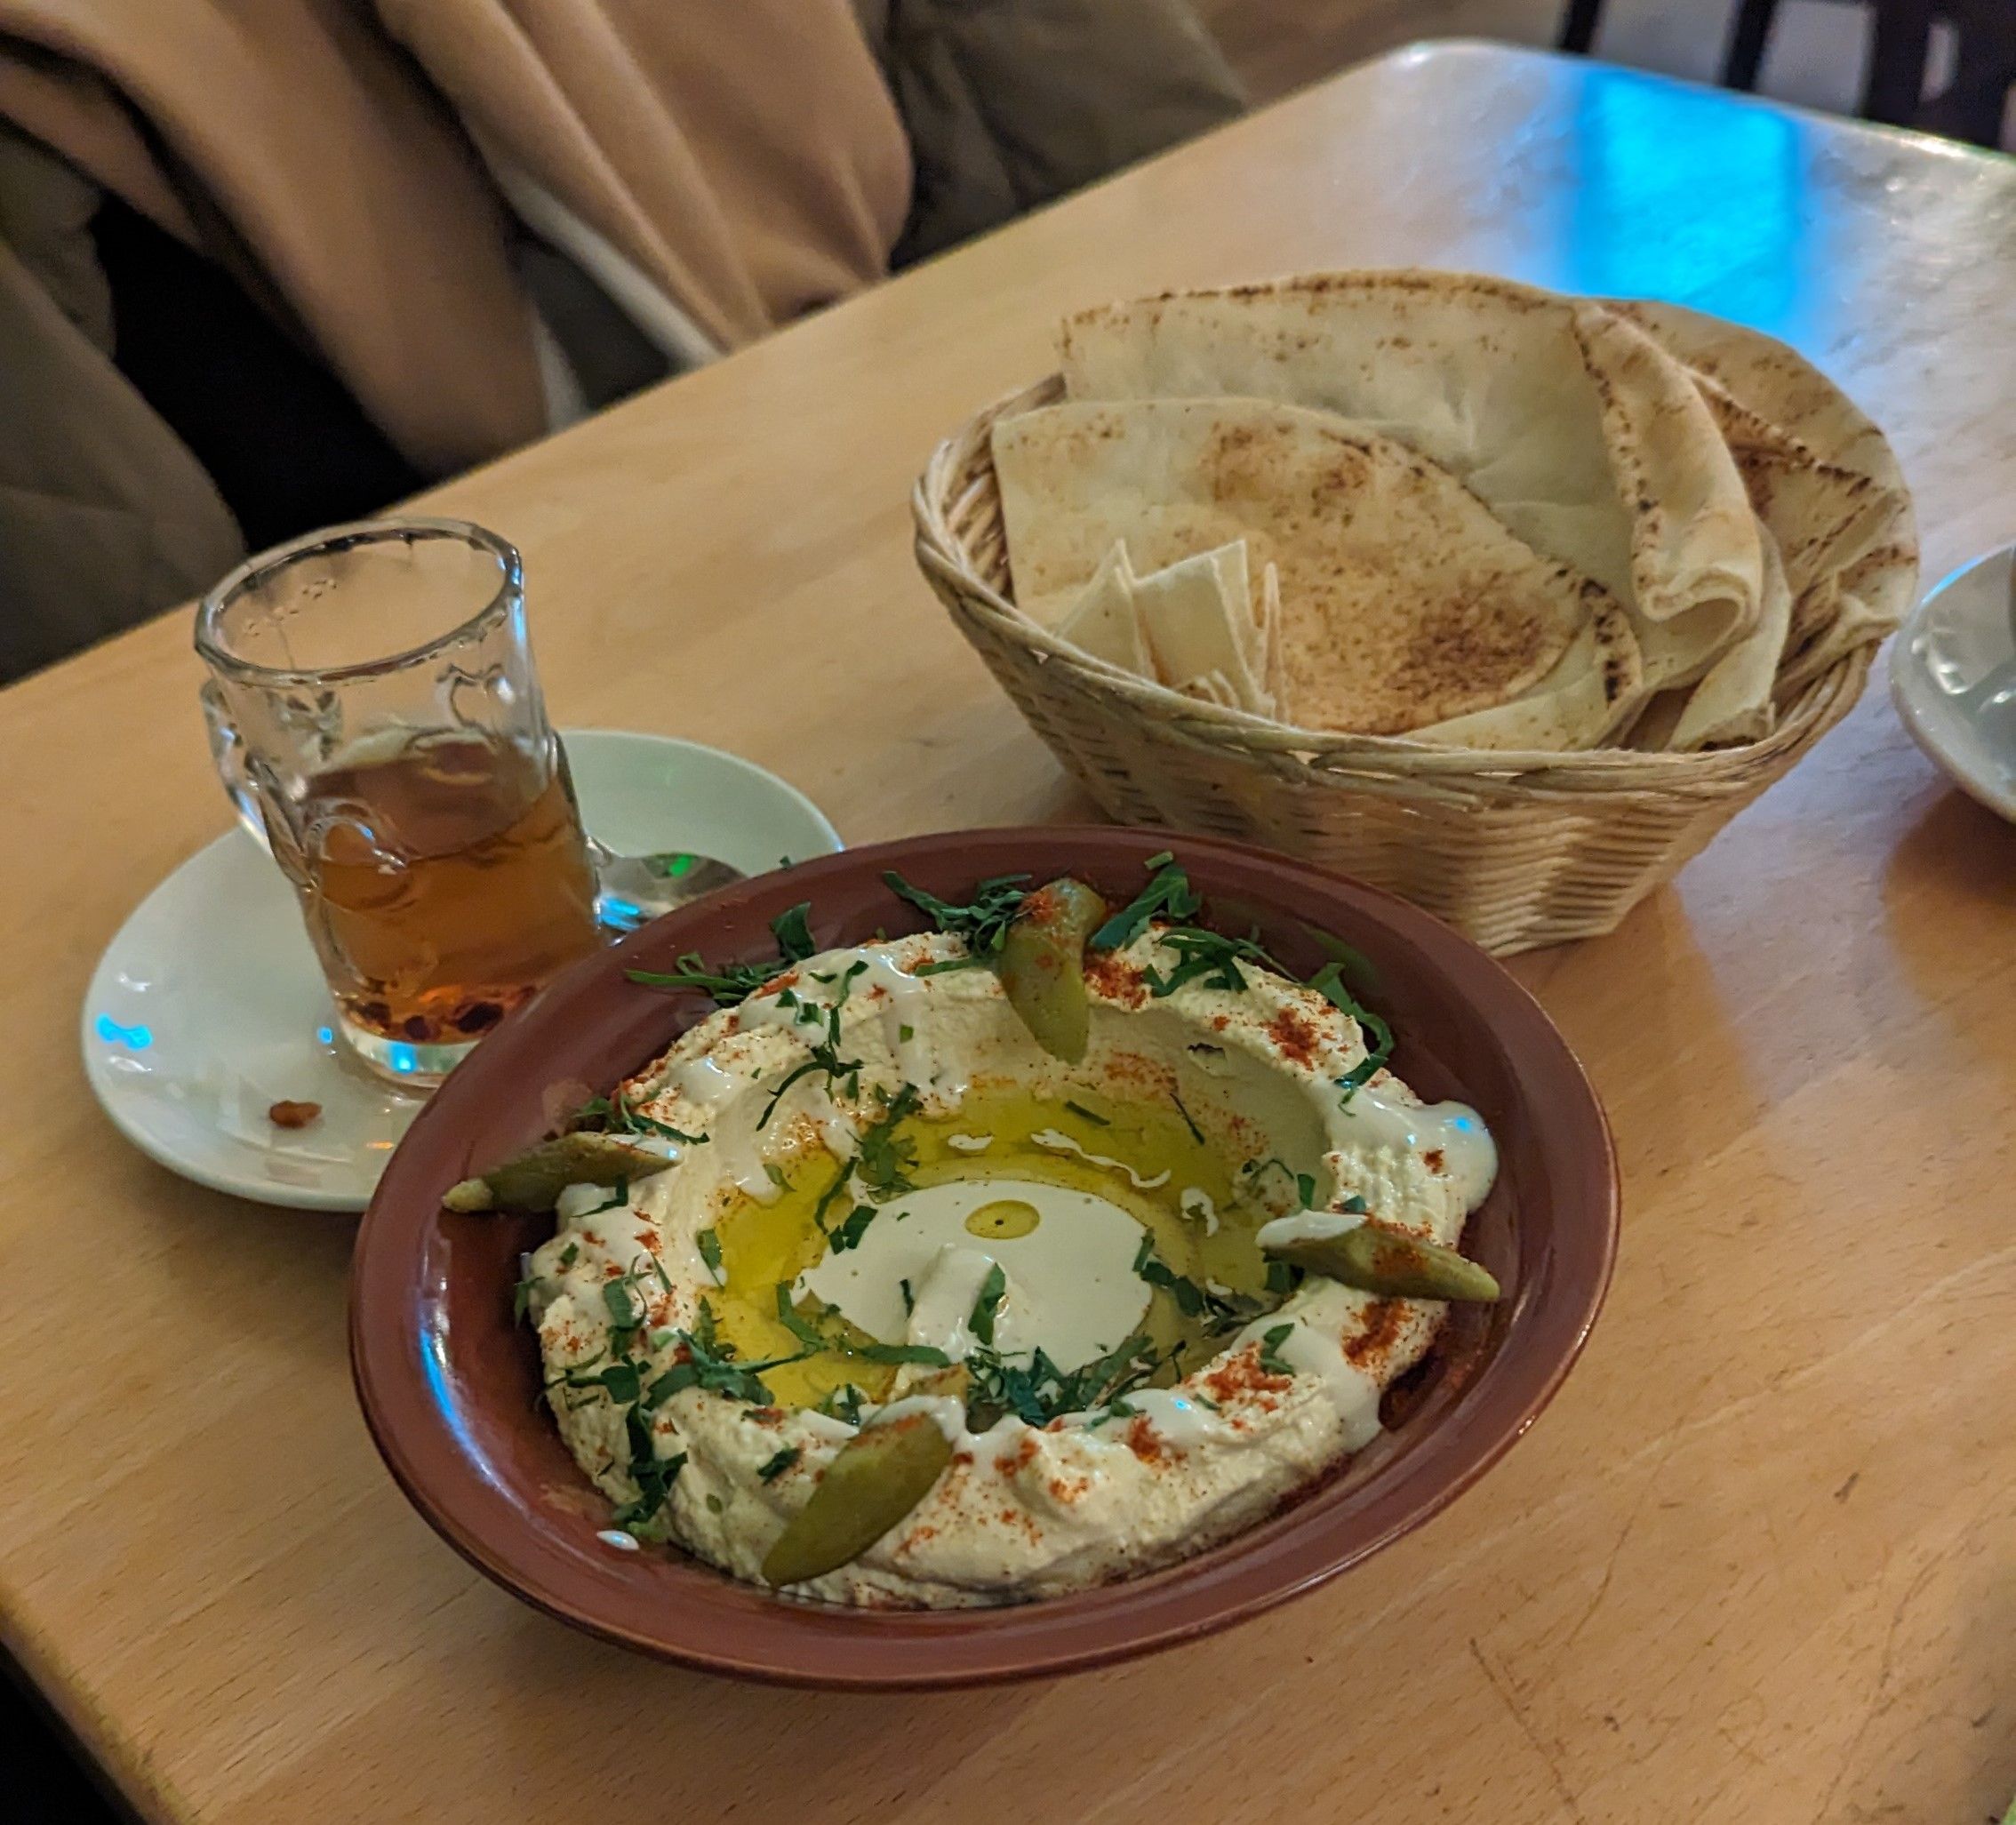 Hummus bil Tahina - Kichererbsenmus mit Tahina (Sesambrei) und Zitrone, dazu klassisches, arabisches Brot im Shady Leipzig